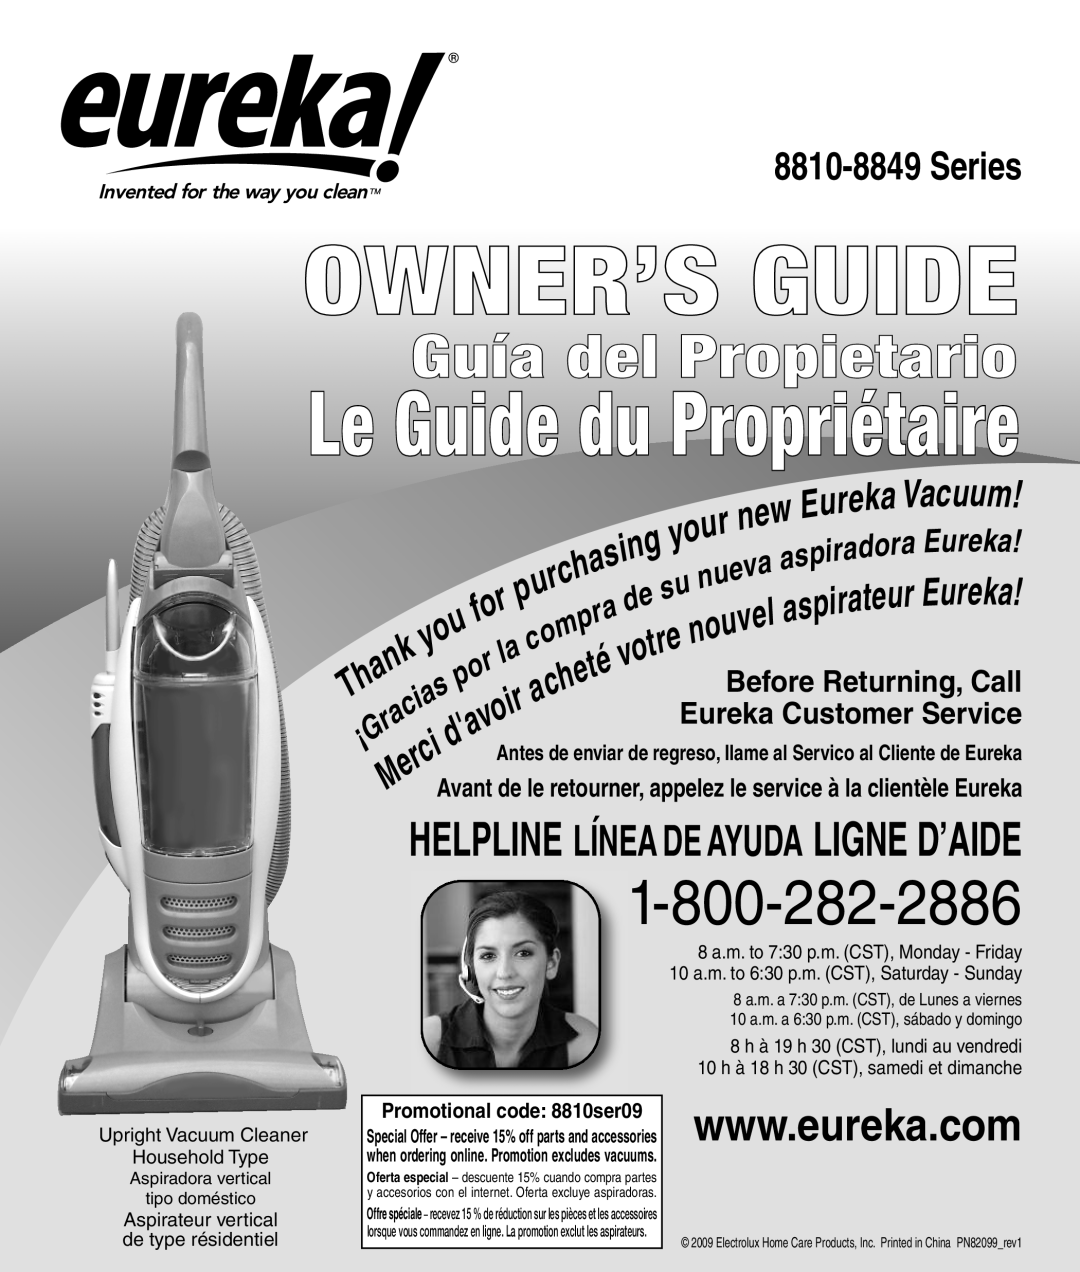 Eureka 8810-8849 SERIES manual Owner’S Guide, Le Guide du Propriétaire, Guía del Propietario, Series 